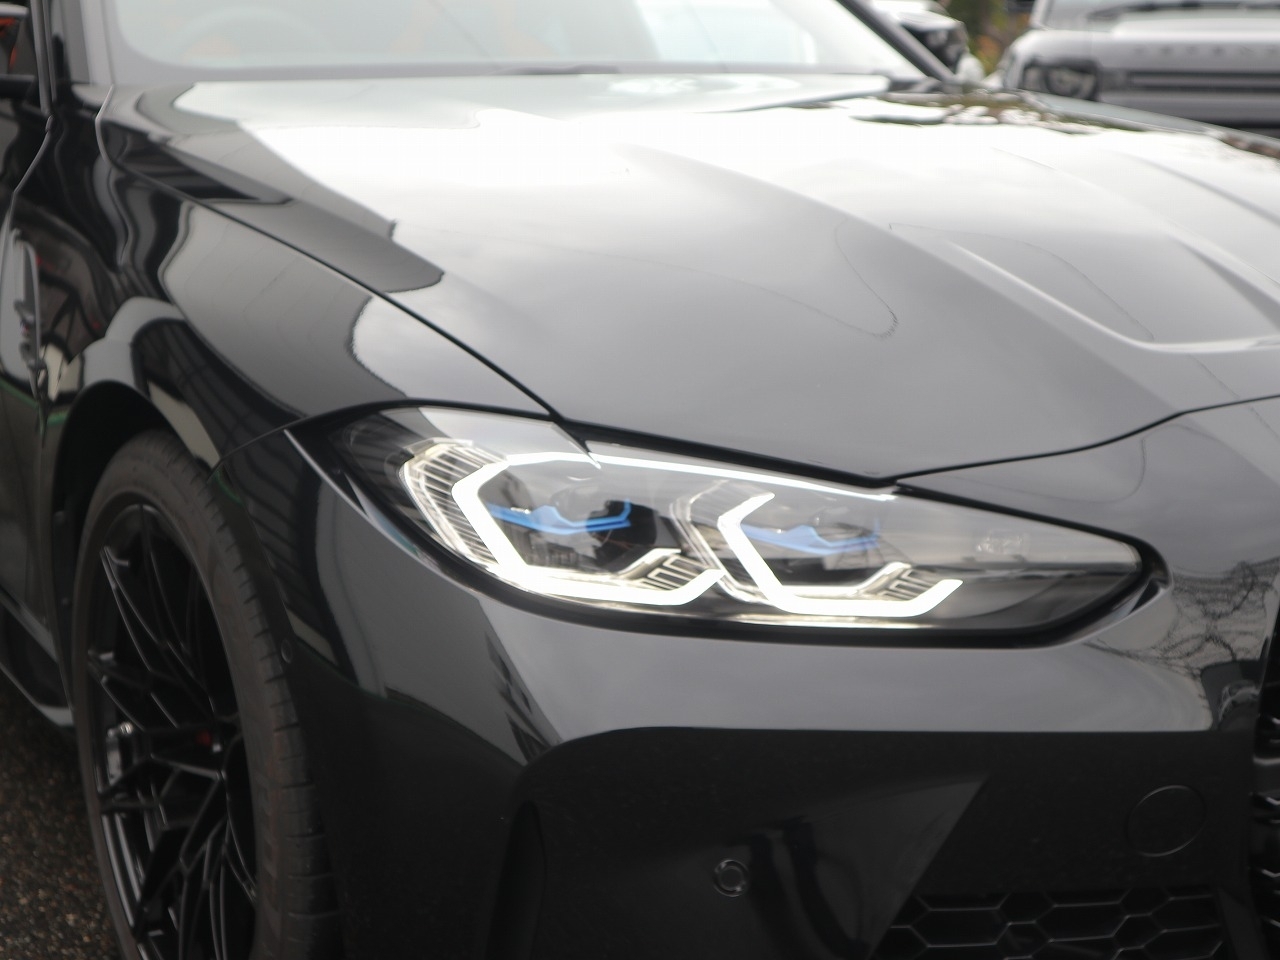 Марка BMW модель M3